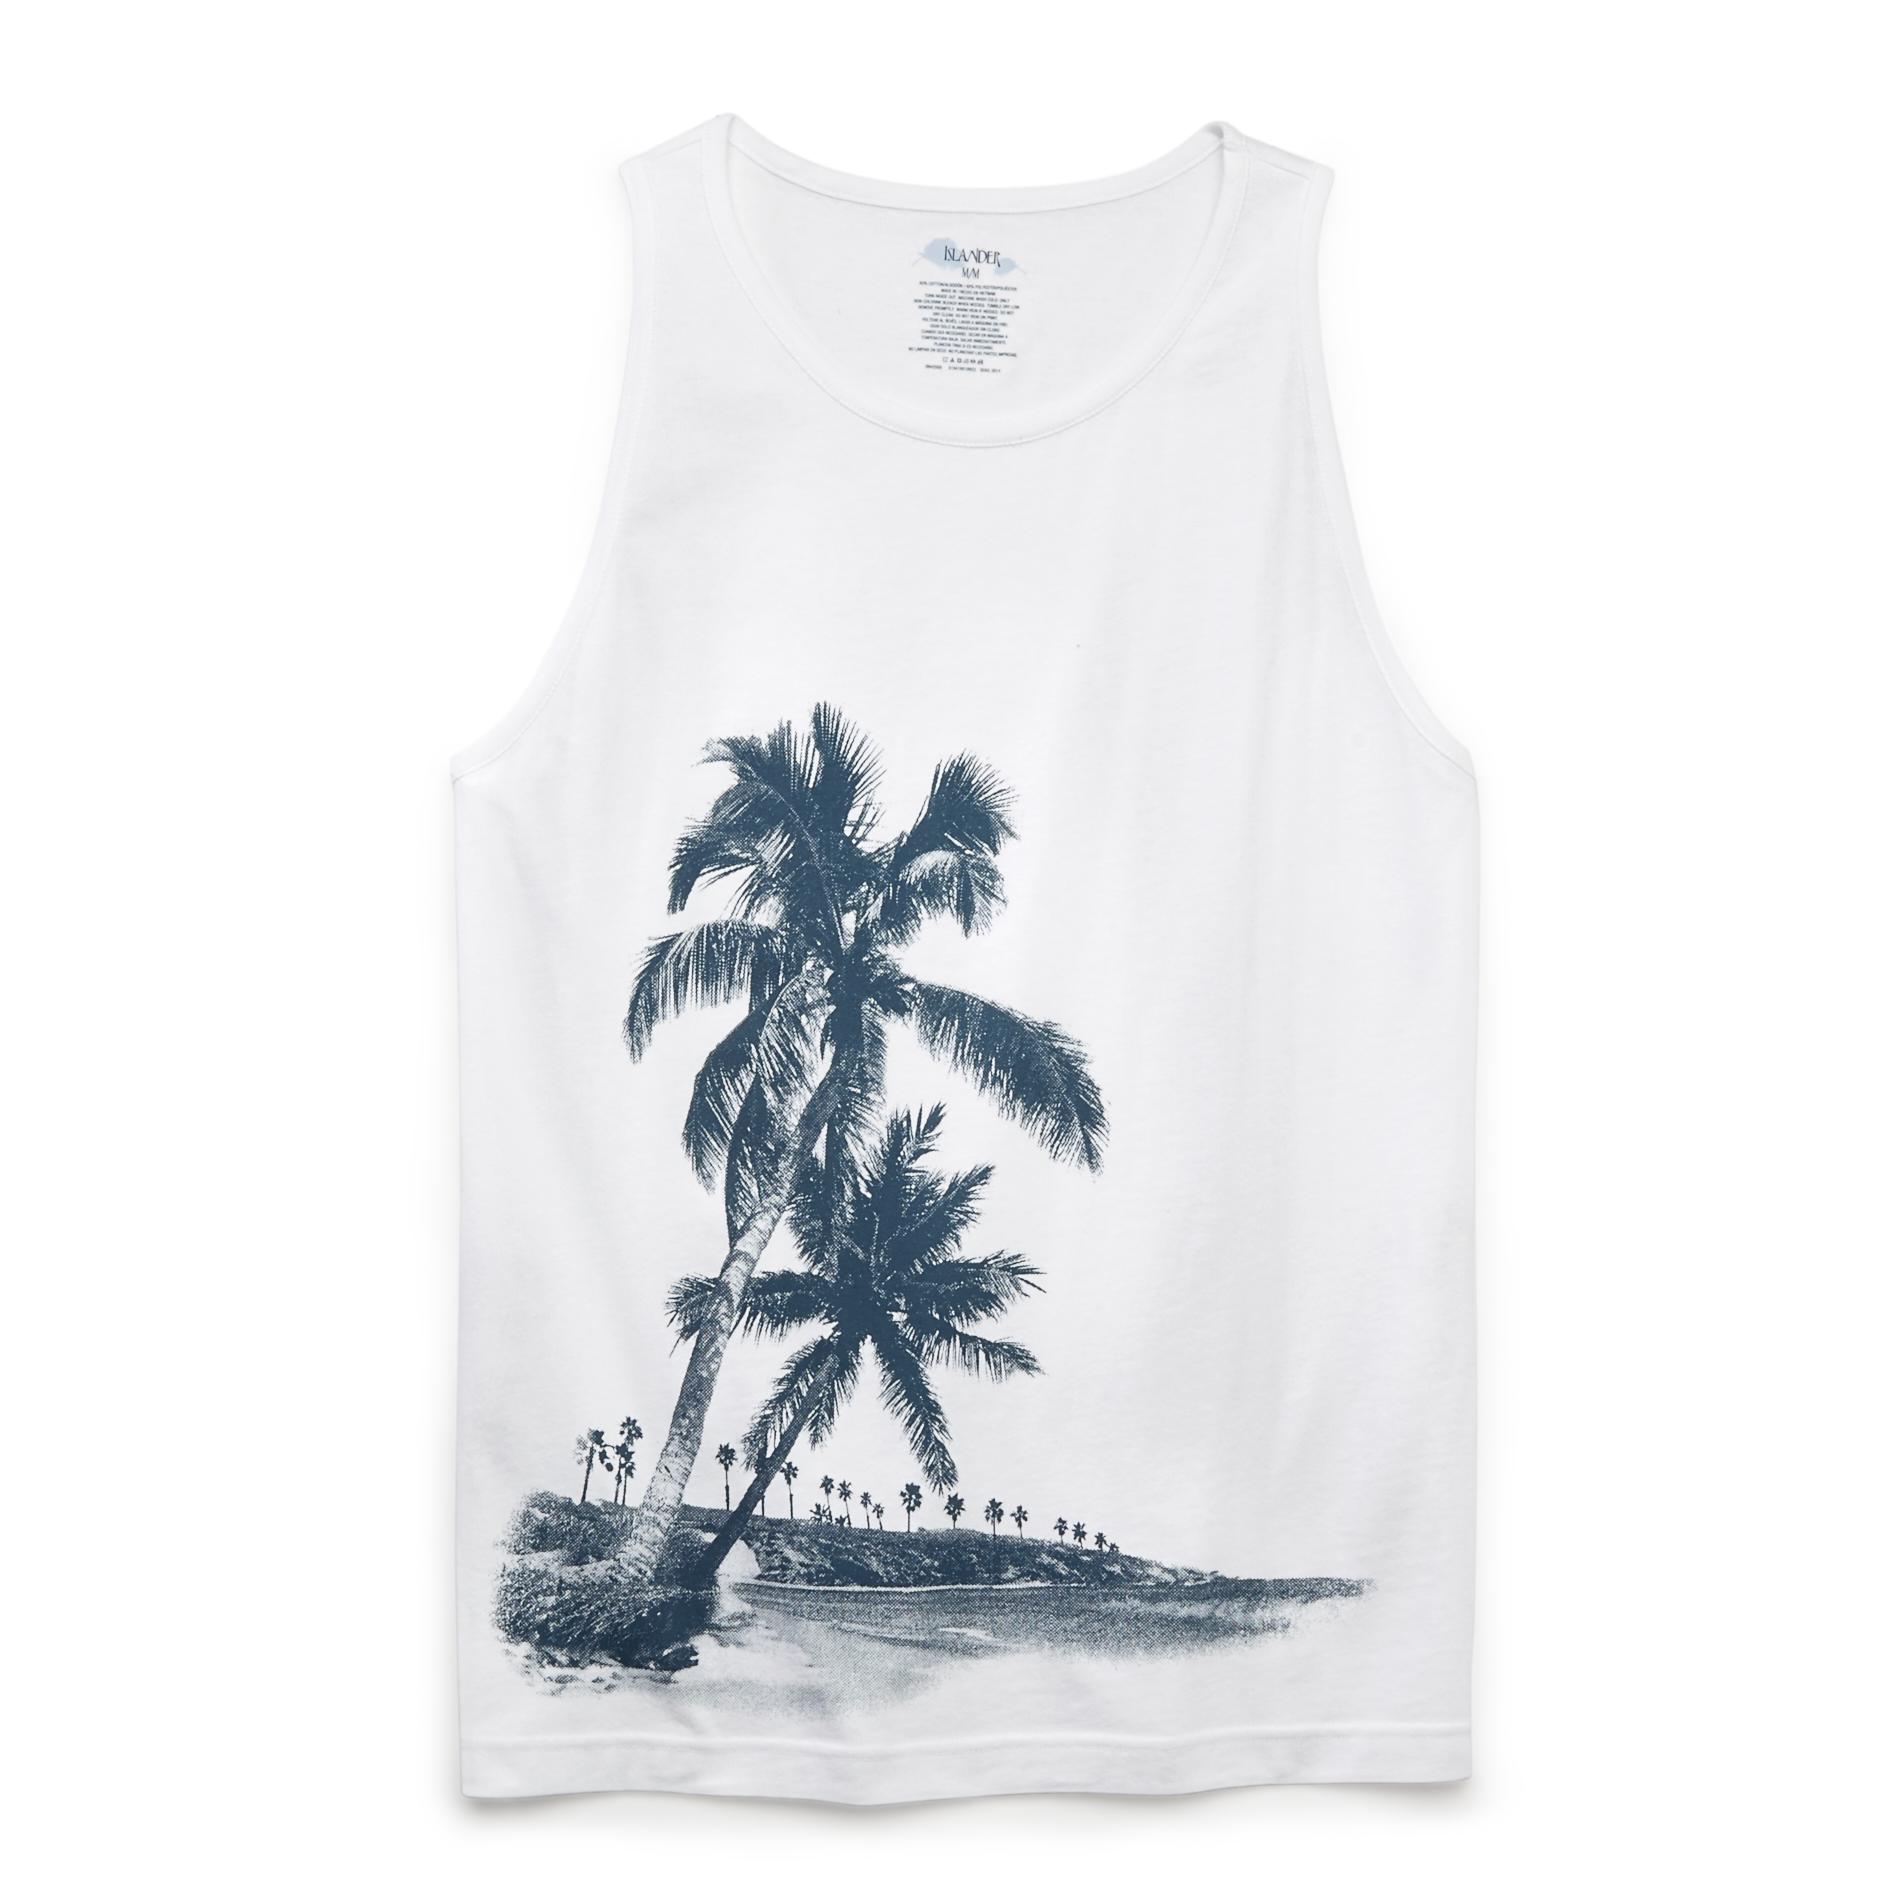 Islander Men's Sleeveless Graphic T-Shirt - Palm Trees